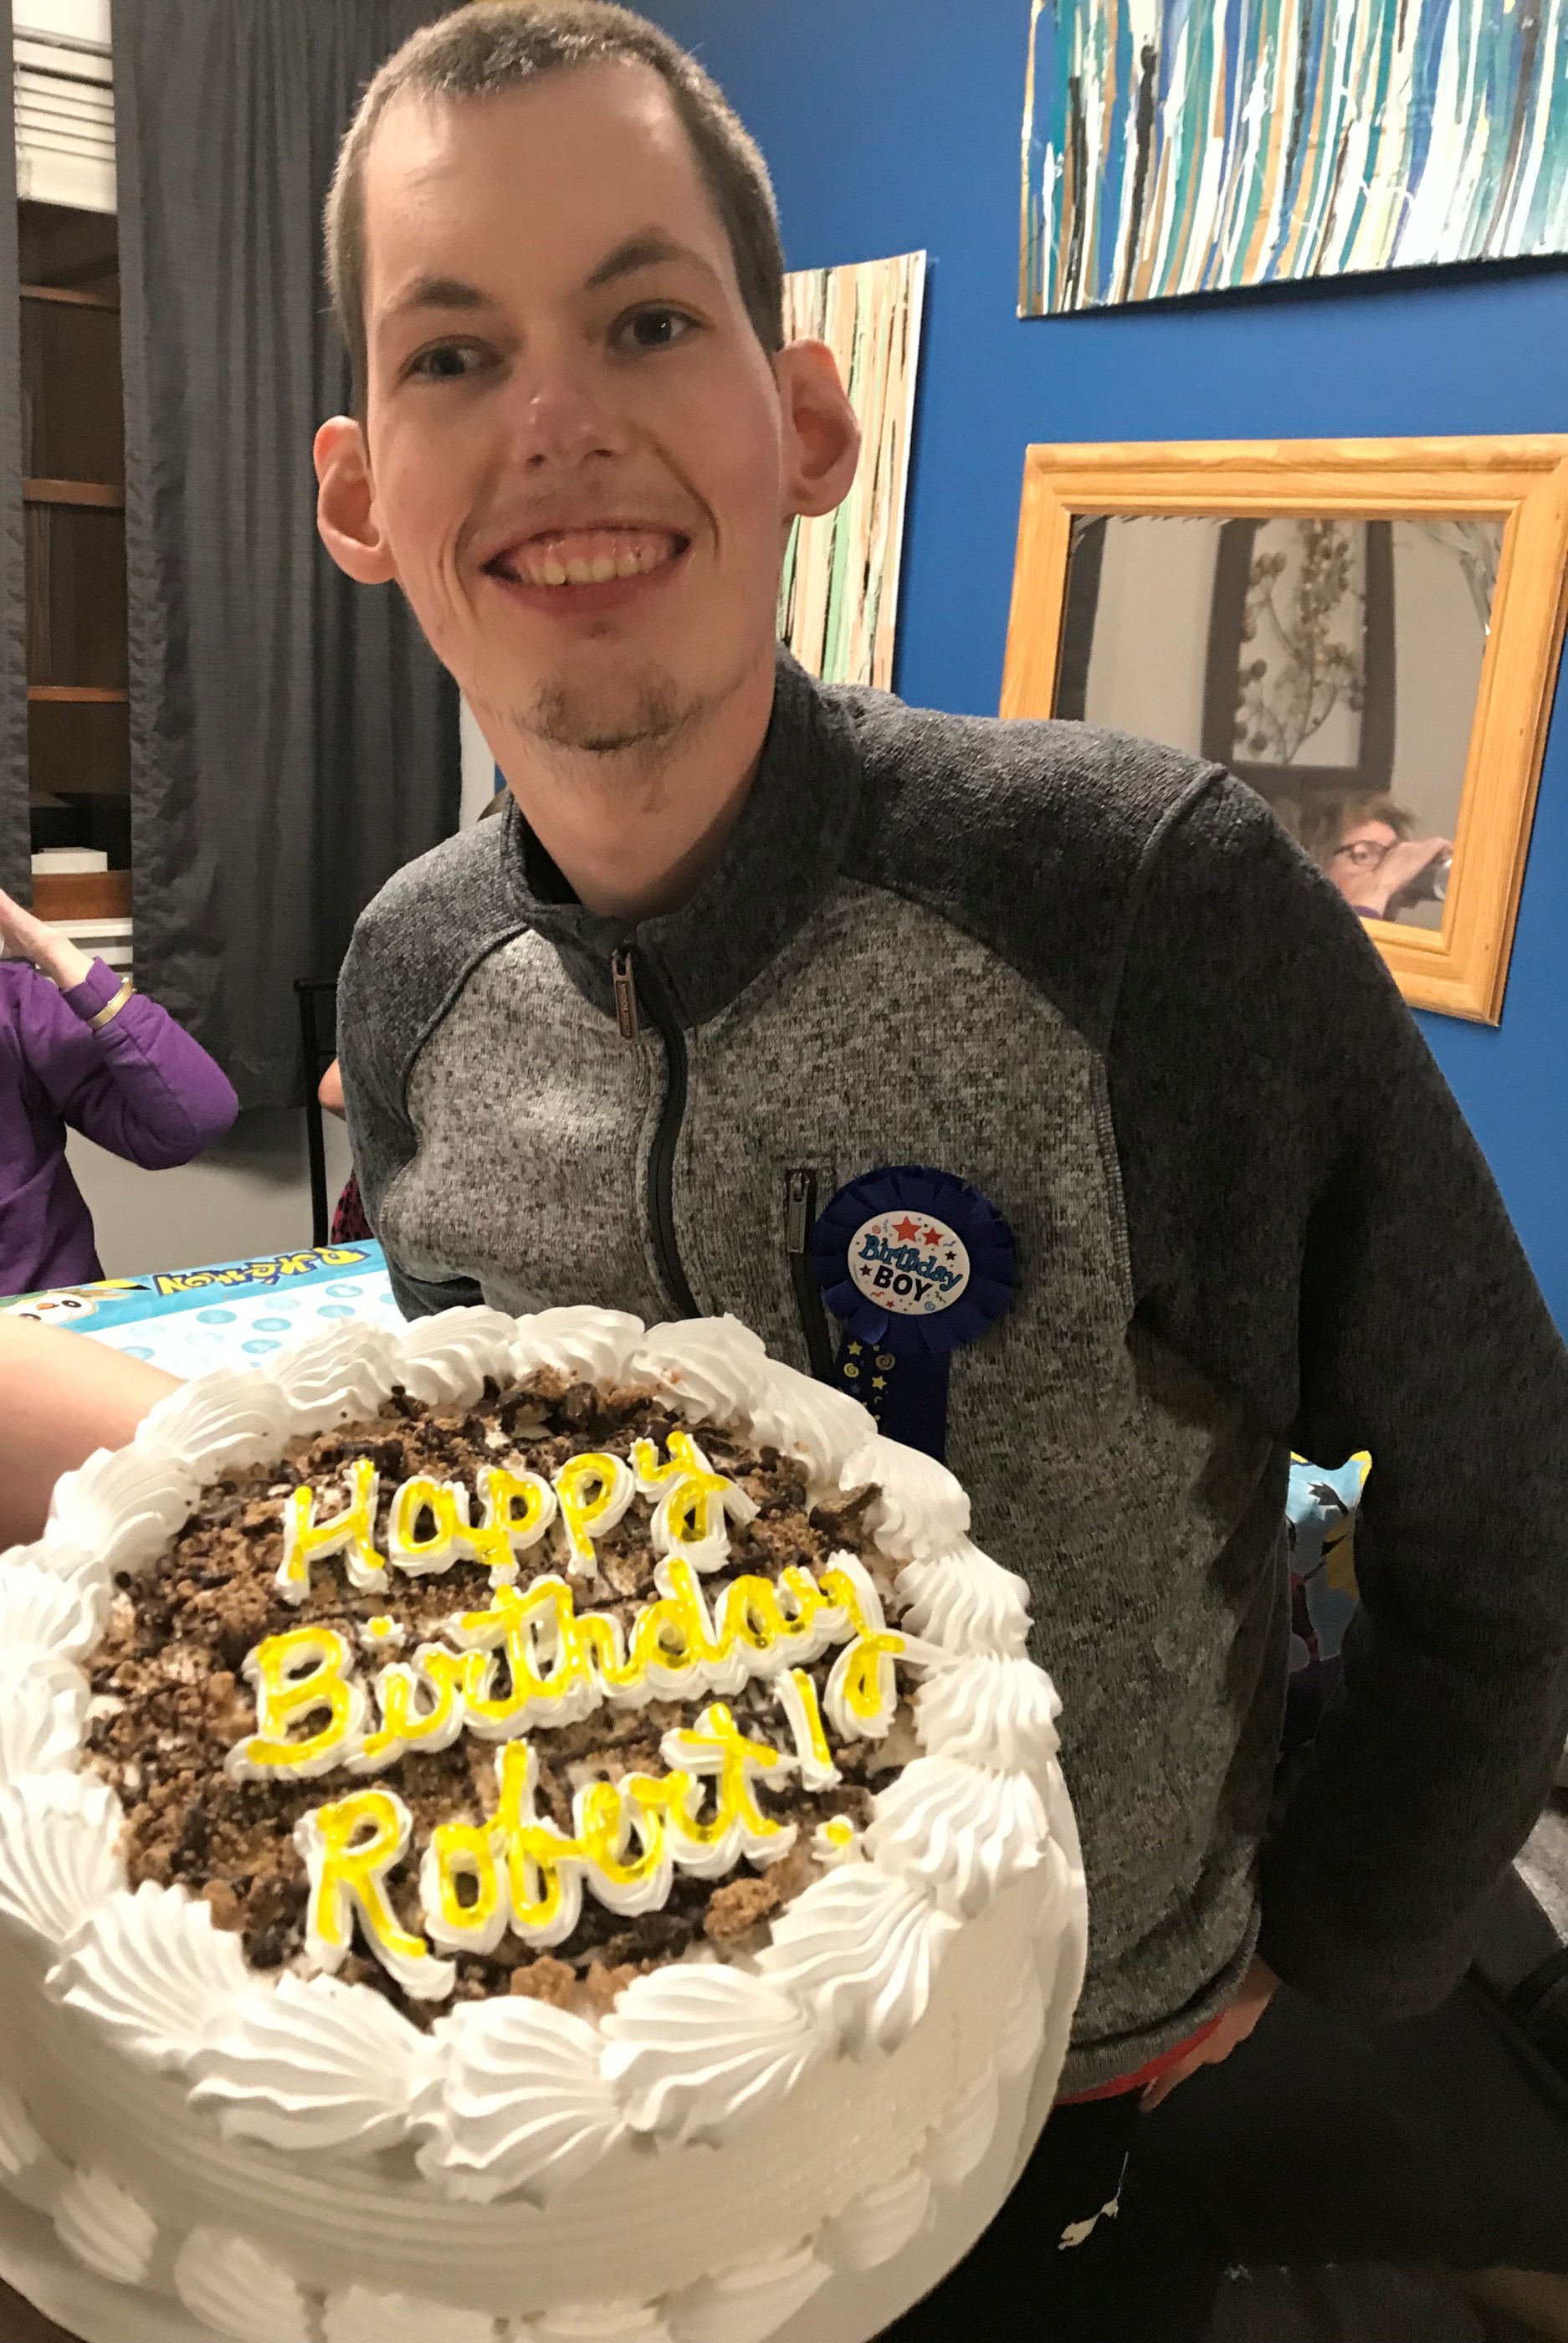 Robert Favorite on his 30th birthday